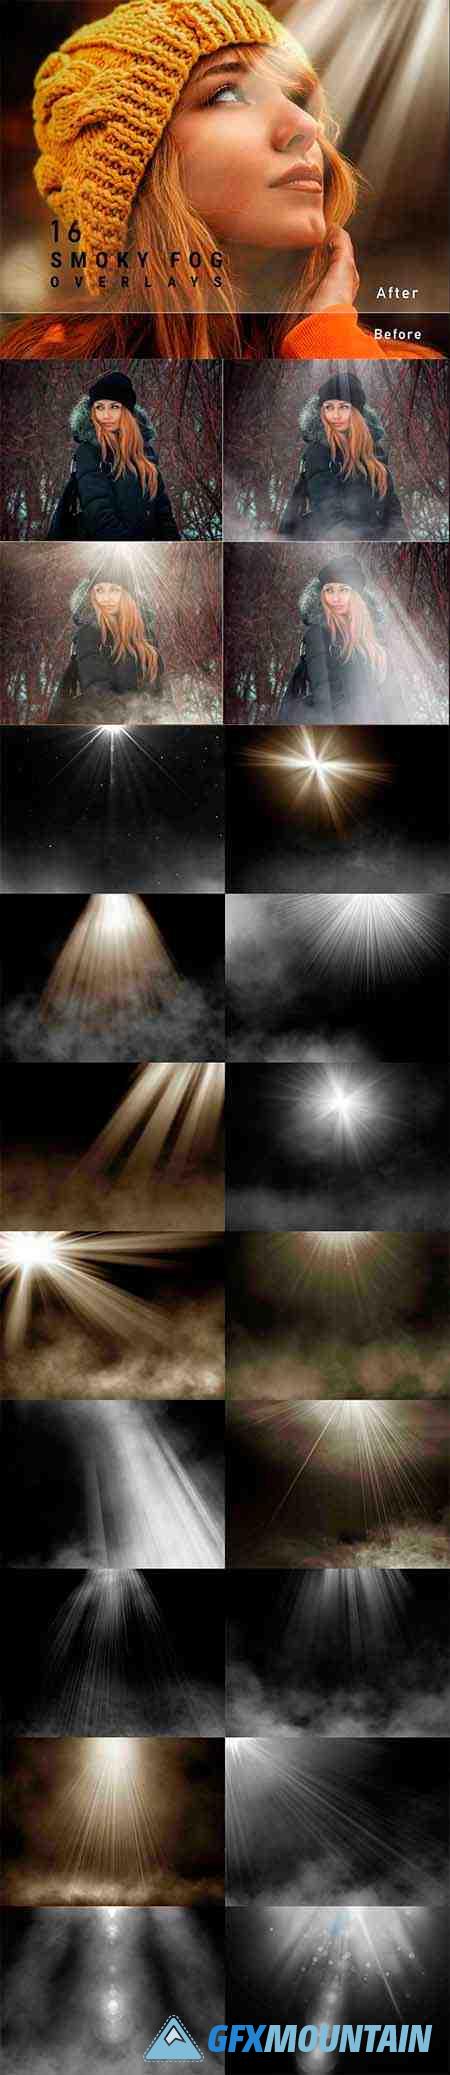 16 Smoky Light Overlays, Realistic light overlays, Smoke overlays